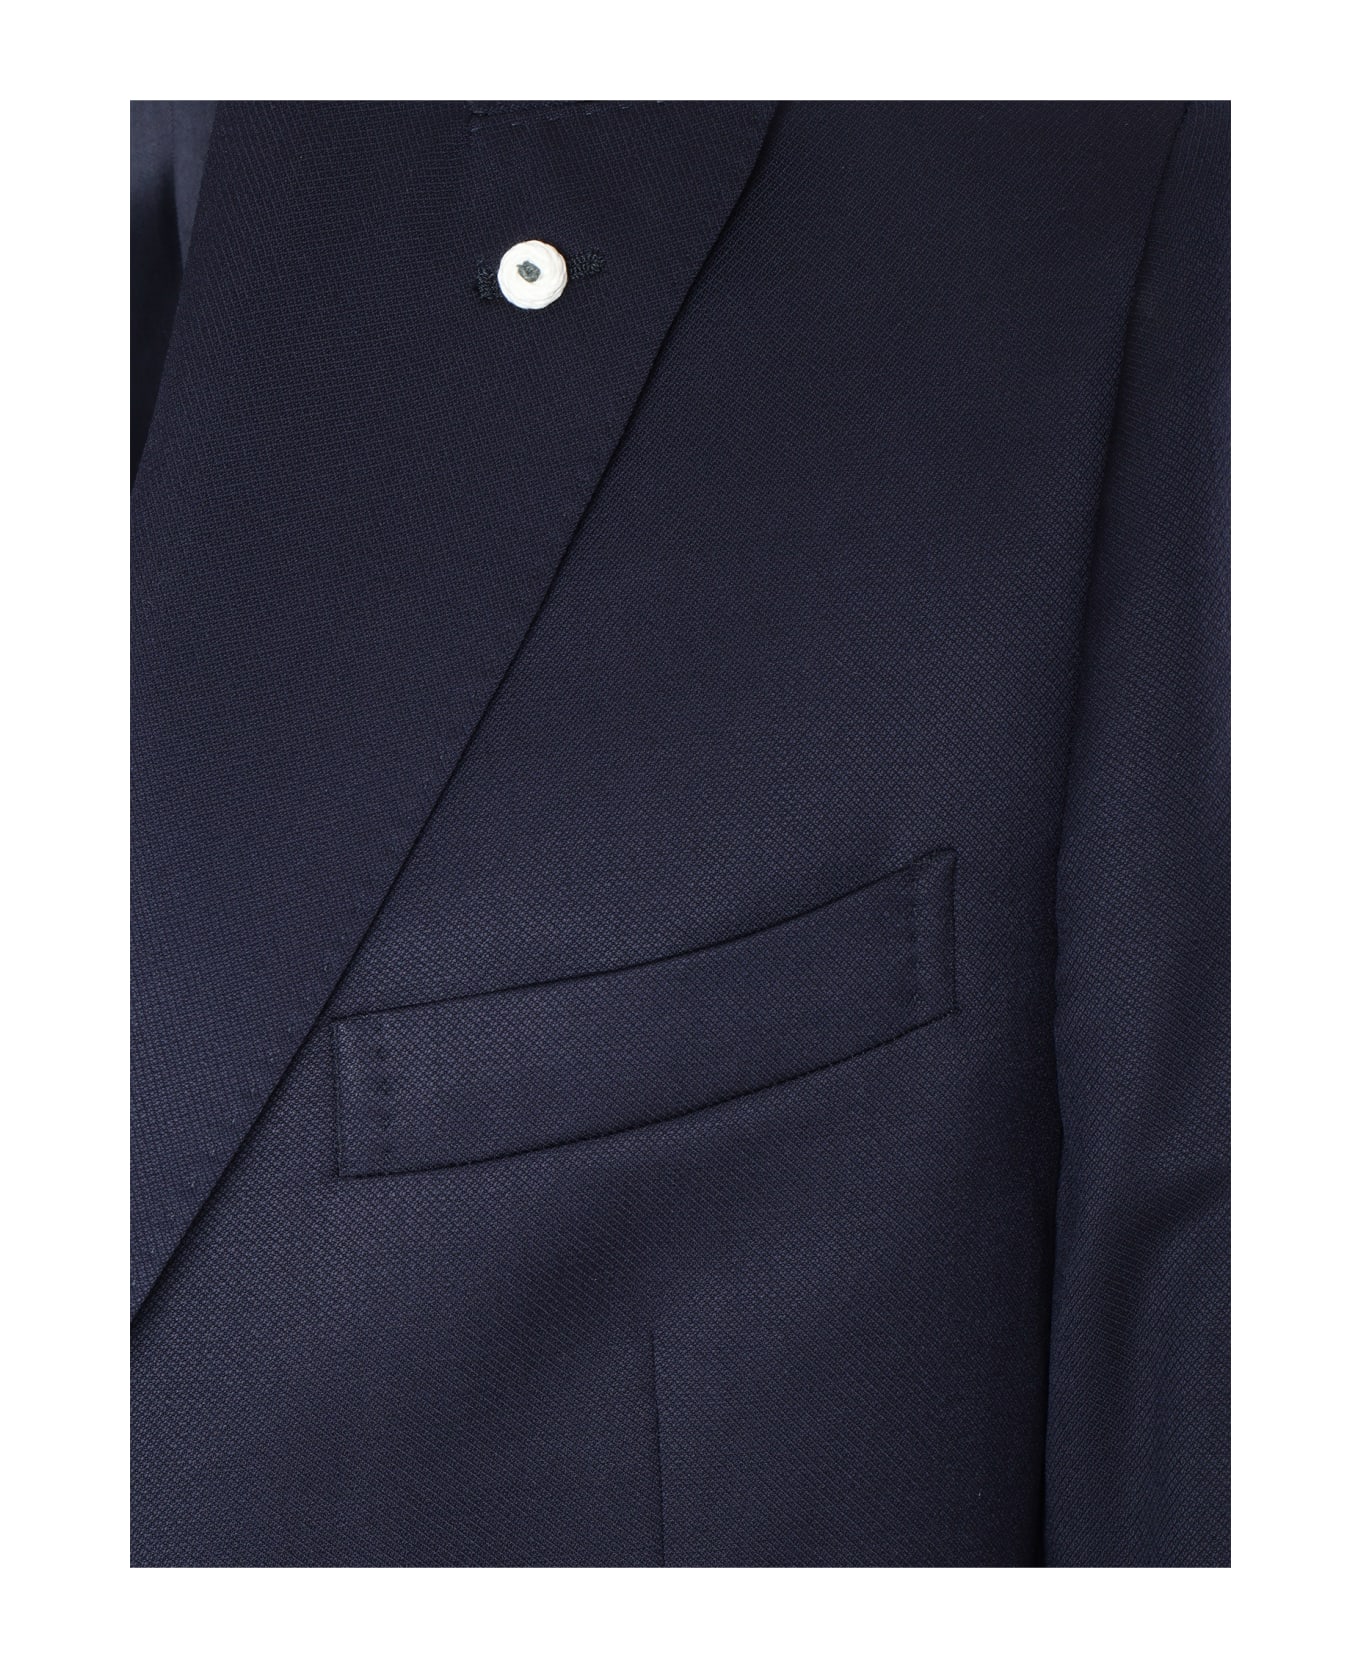 L.B.M. 1911 2-pieces Elegant Suit - BLUE スーツ